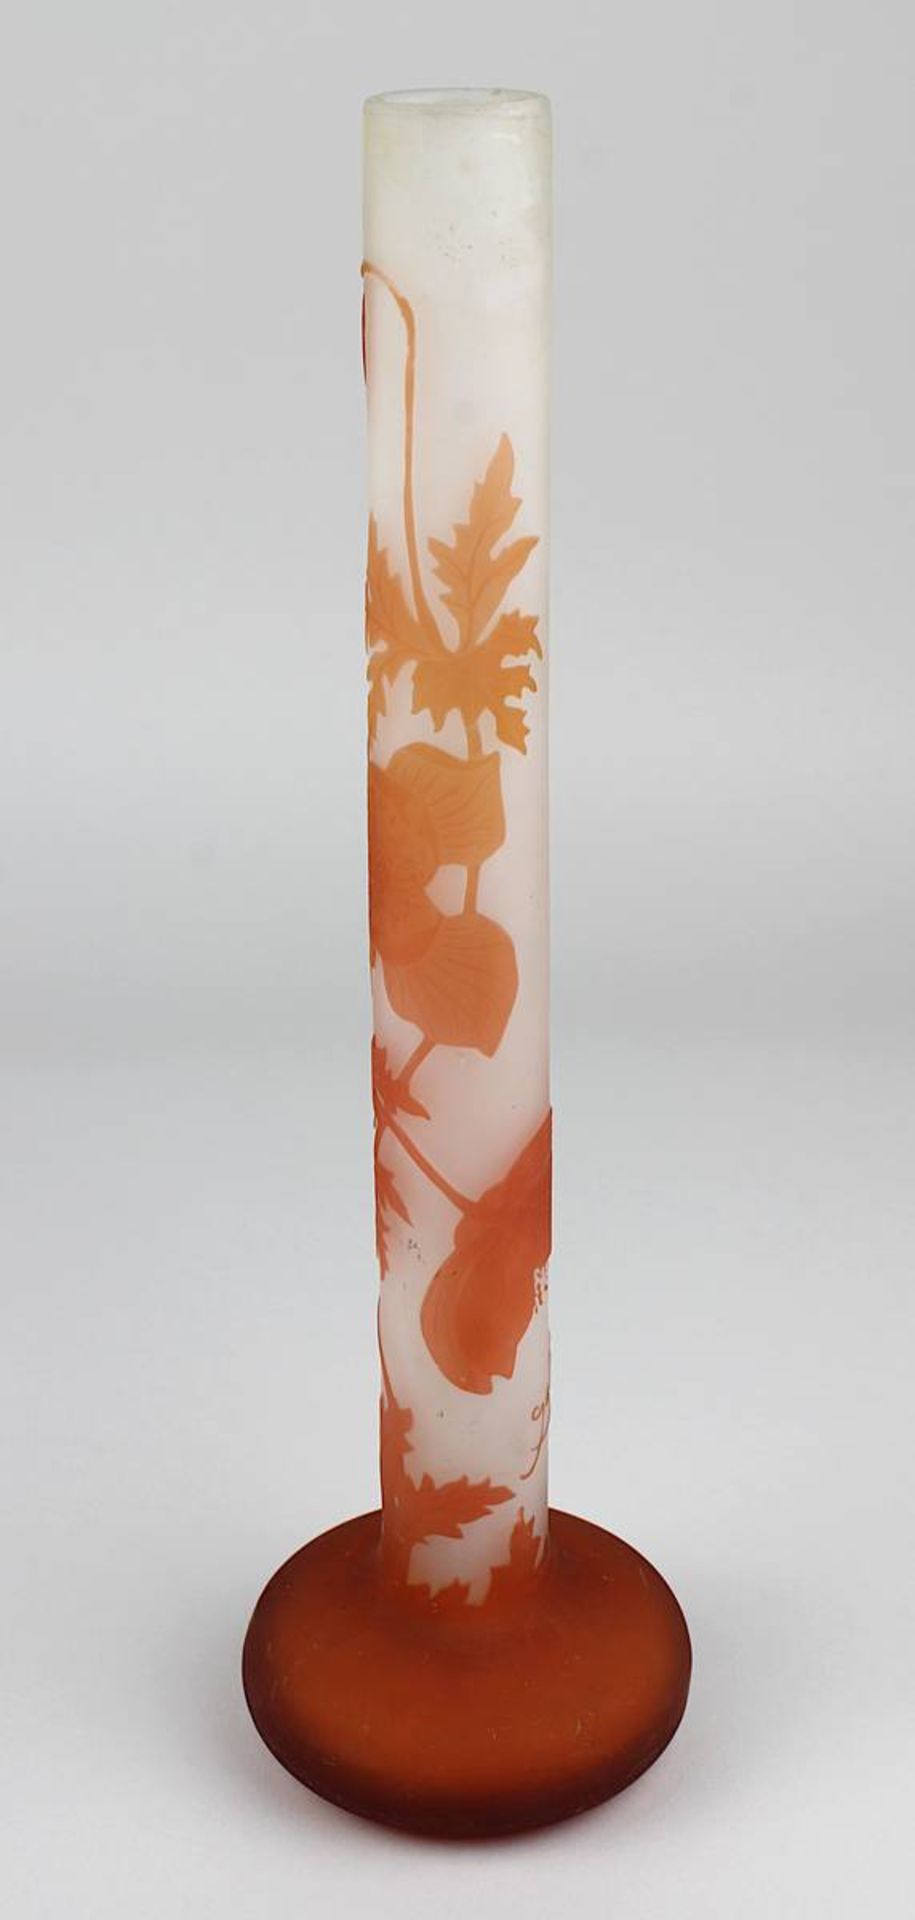 Jugendstil Gallé Stangen-Vase mit Mohndekor, Nancy 1906 - 1914, matt geätzter Klarglaskorpus, im - Image 2 of 4